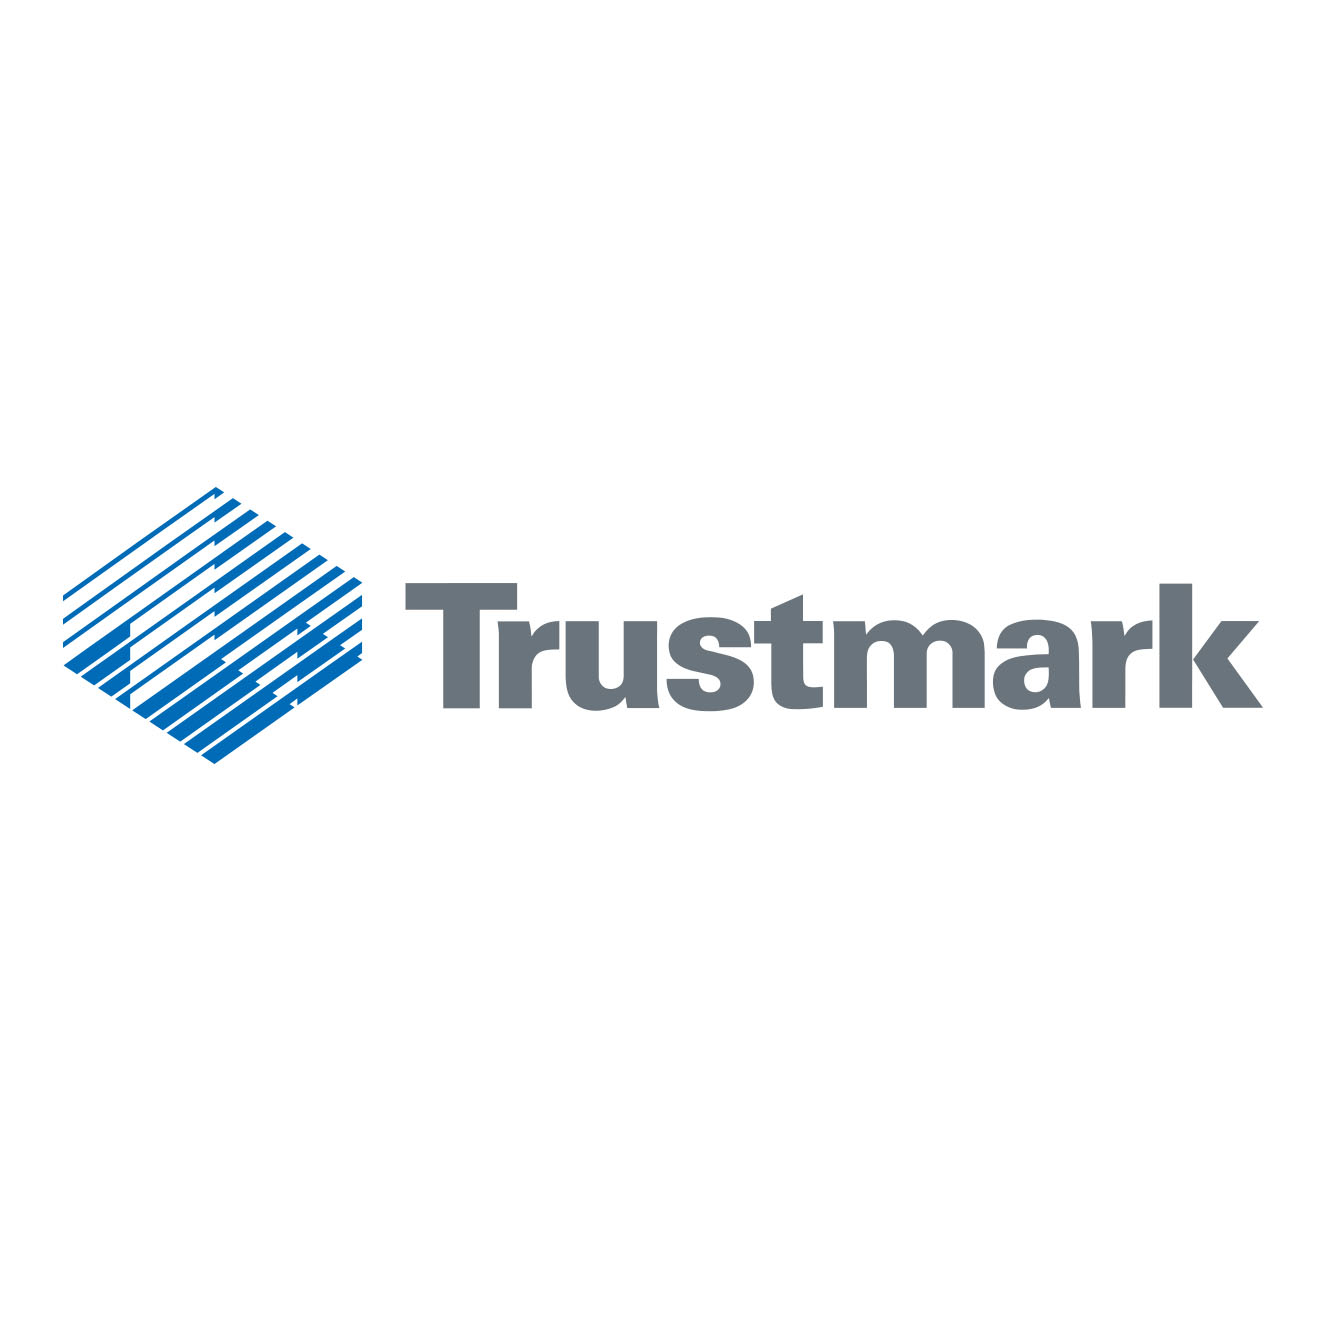 Trustmark Jackson (601)208-5111